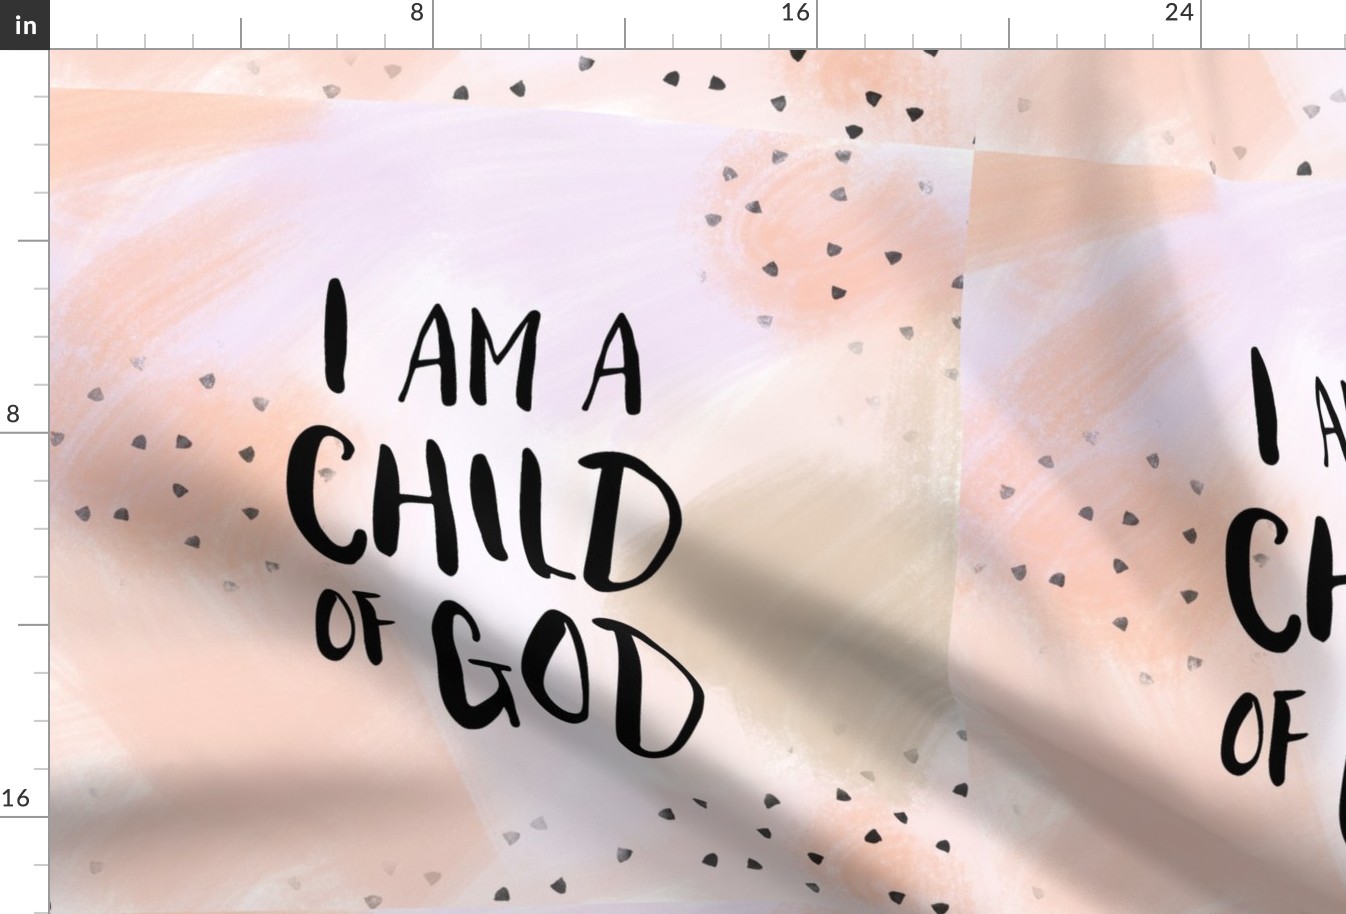 18" i am a child of God || blush